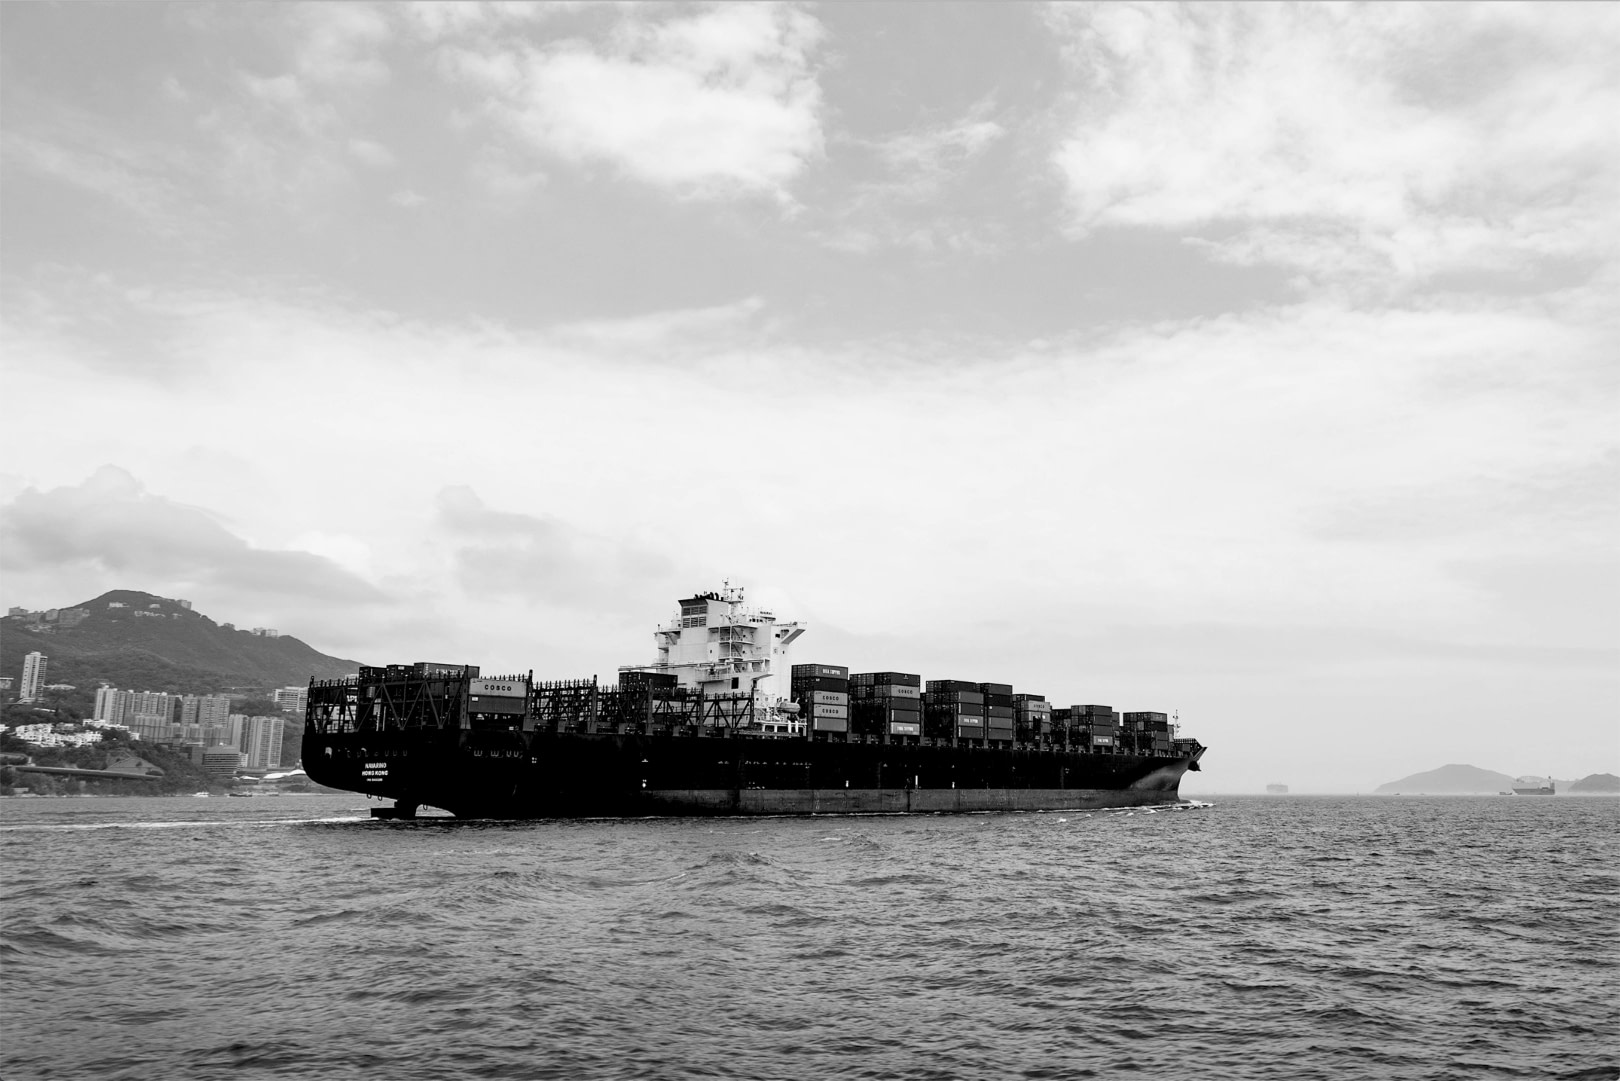 Cargo ship passing Hong Kong Island